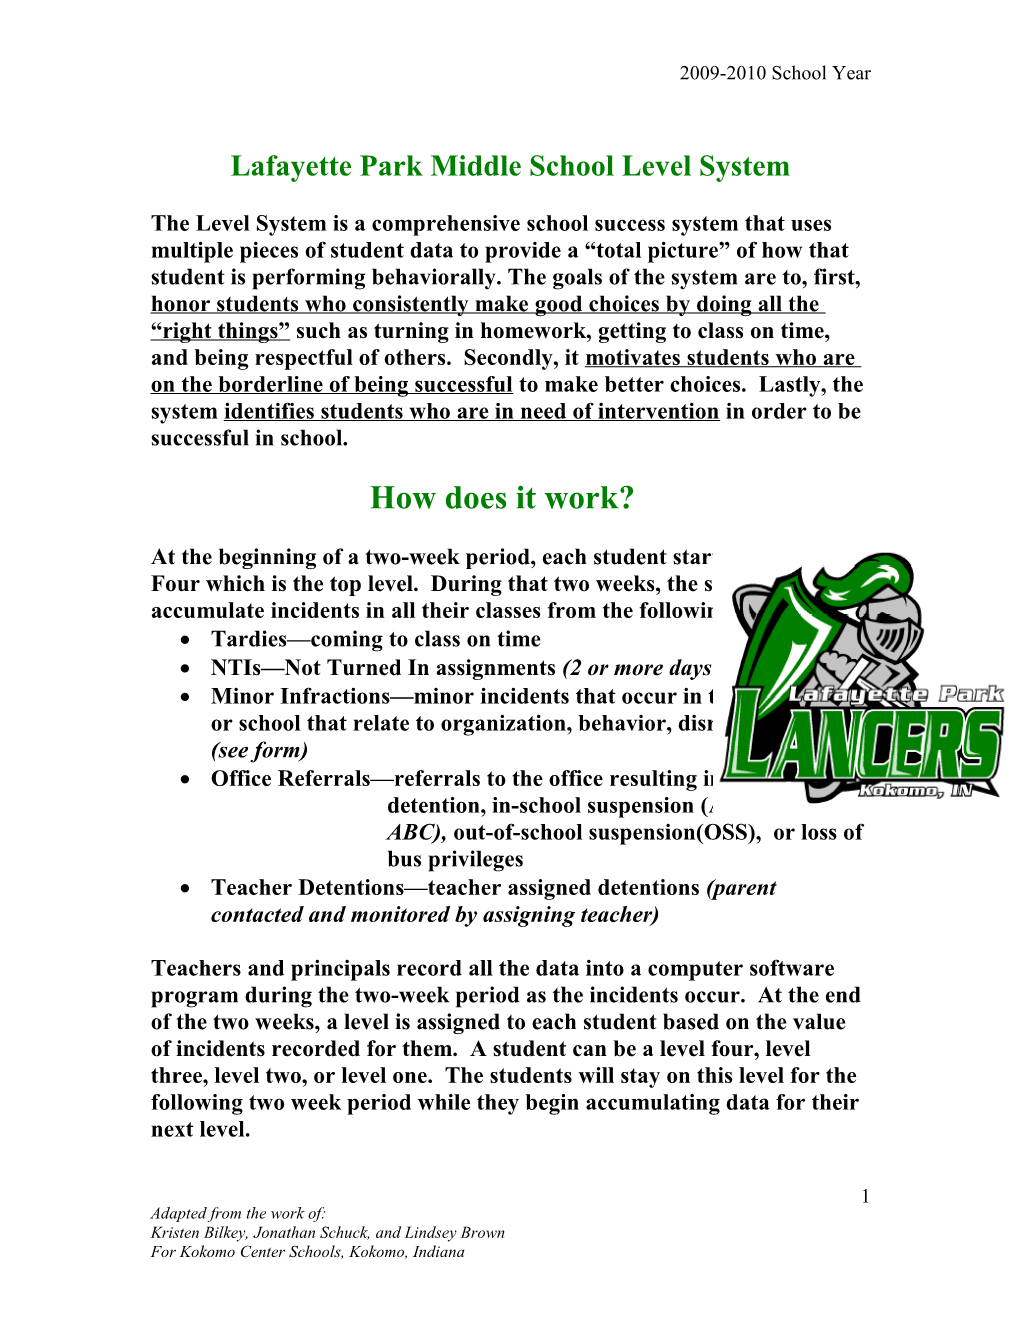 Lafayetteparkmiddle School Level System